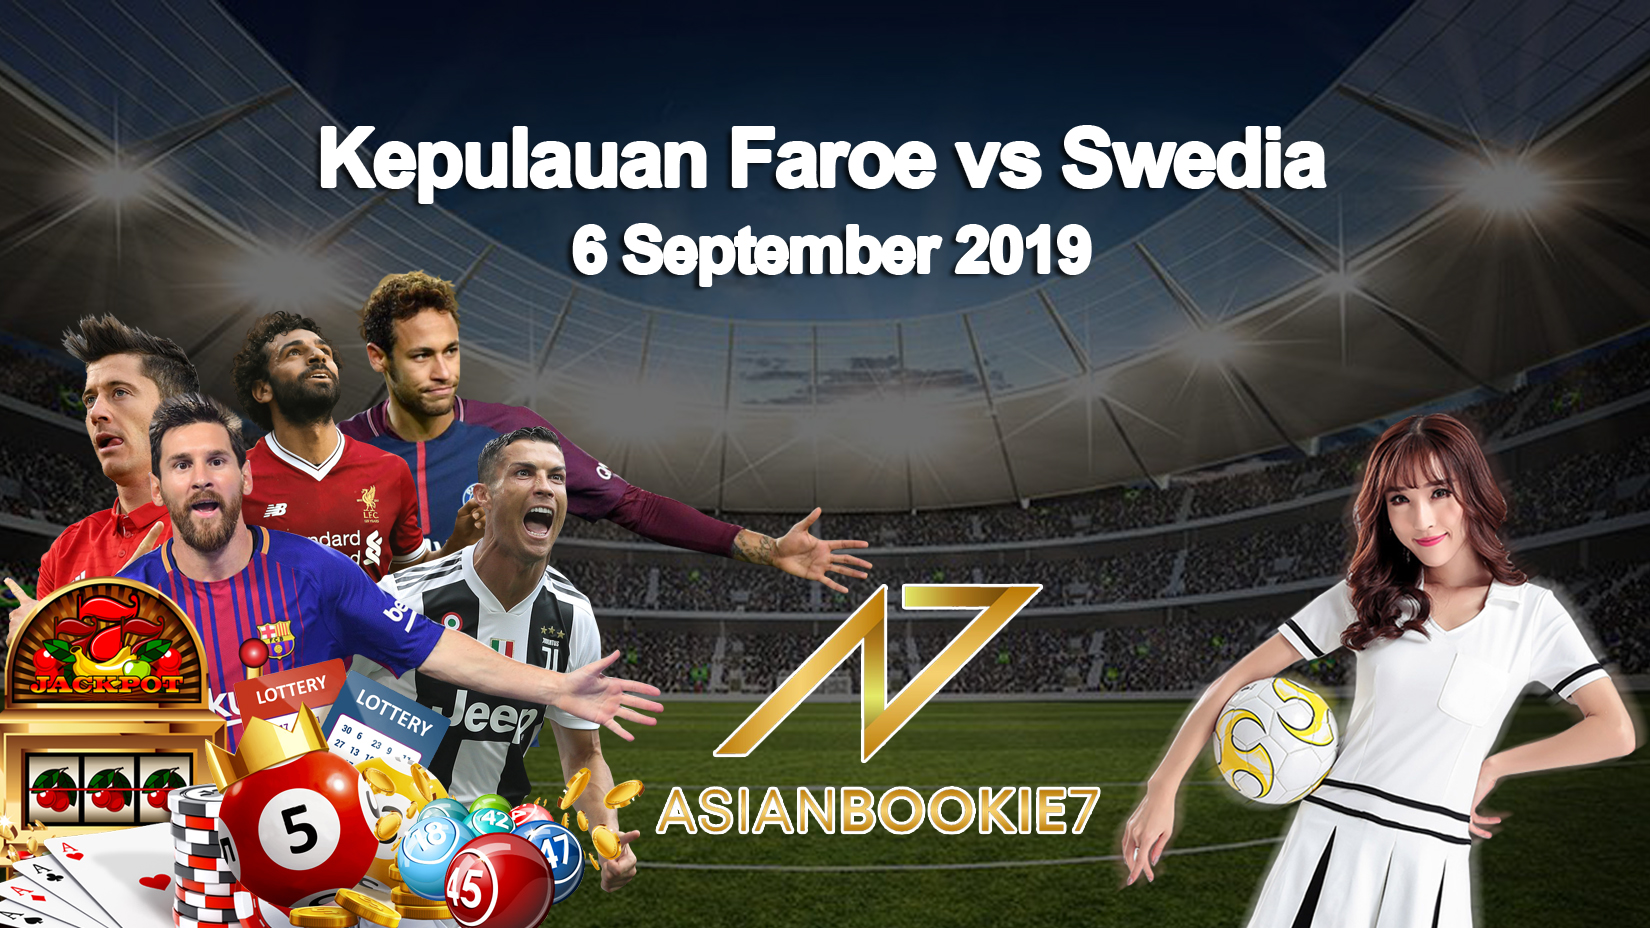 Prediksi Kepulauan Faroe vs Swedia 6 September 2019